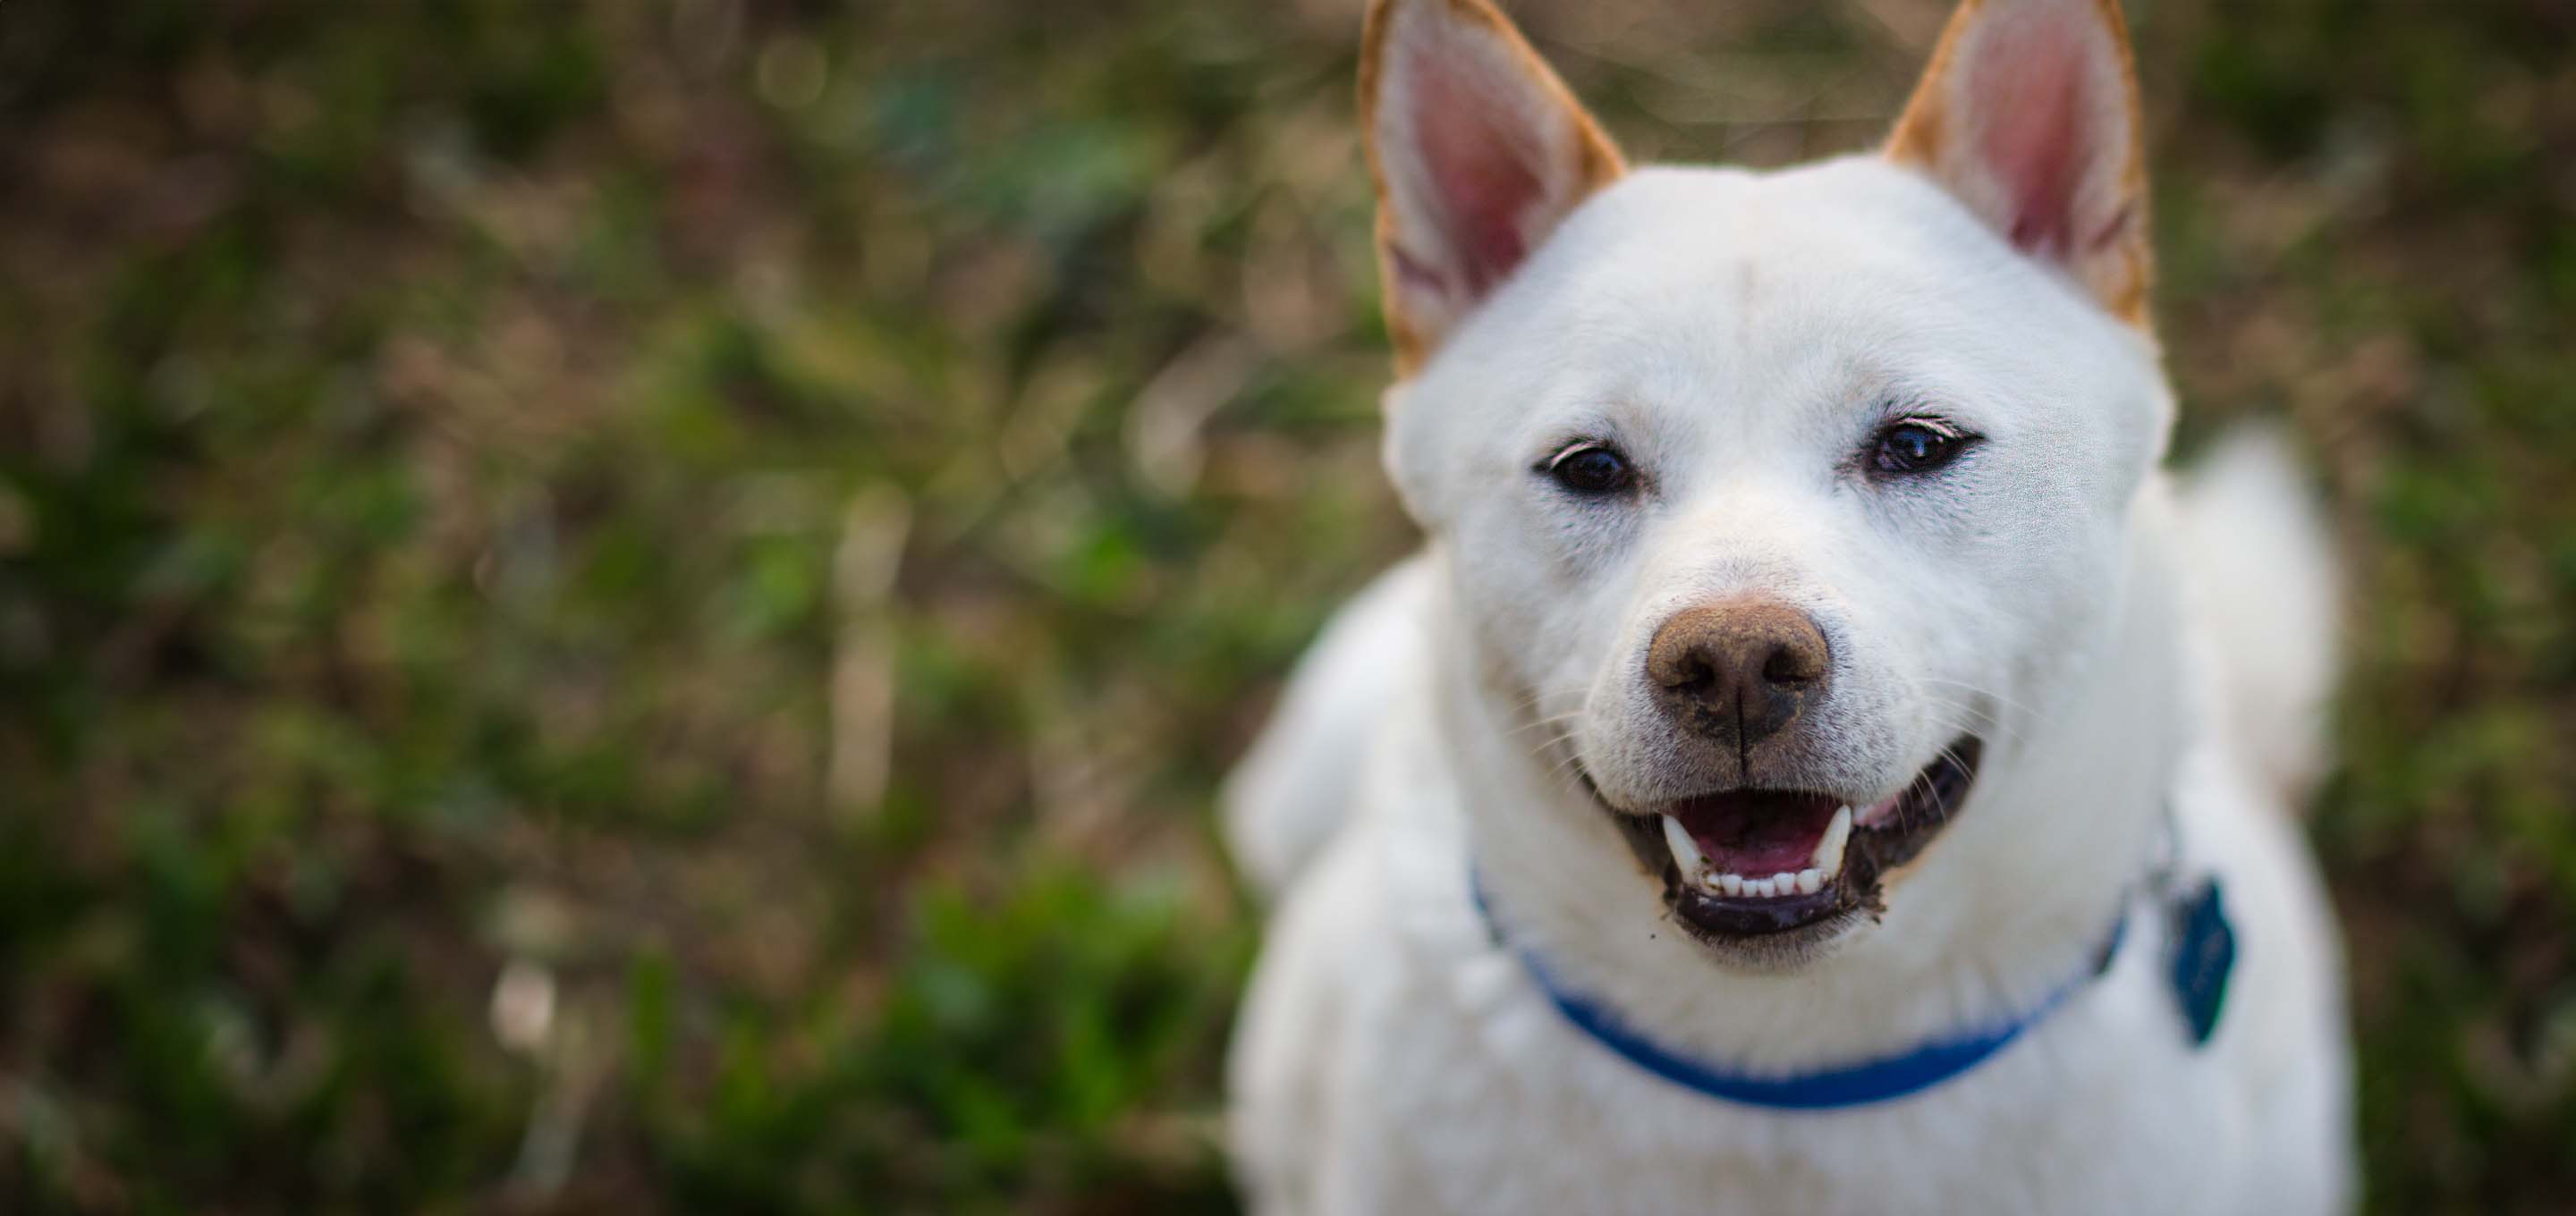 Smiling Kishu dog on grass image